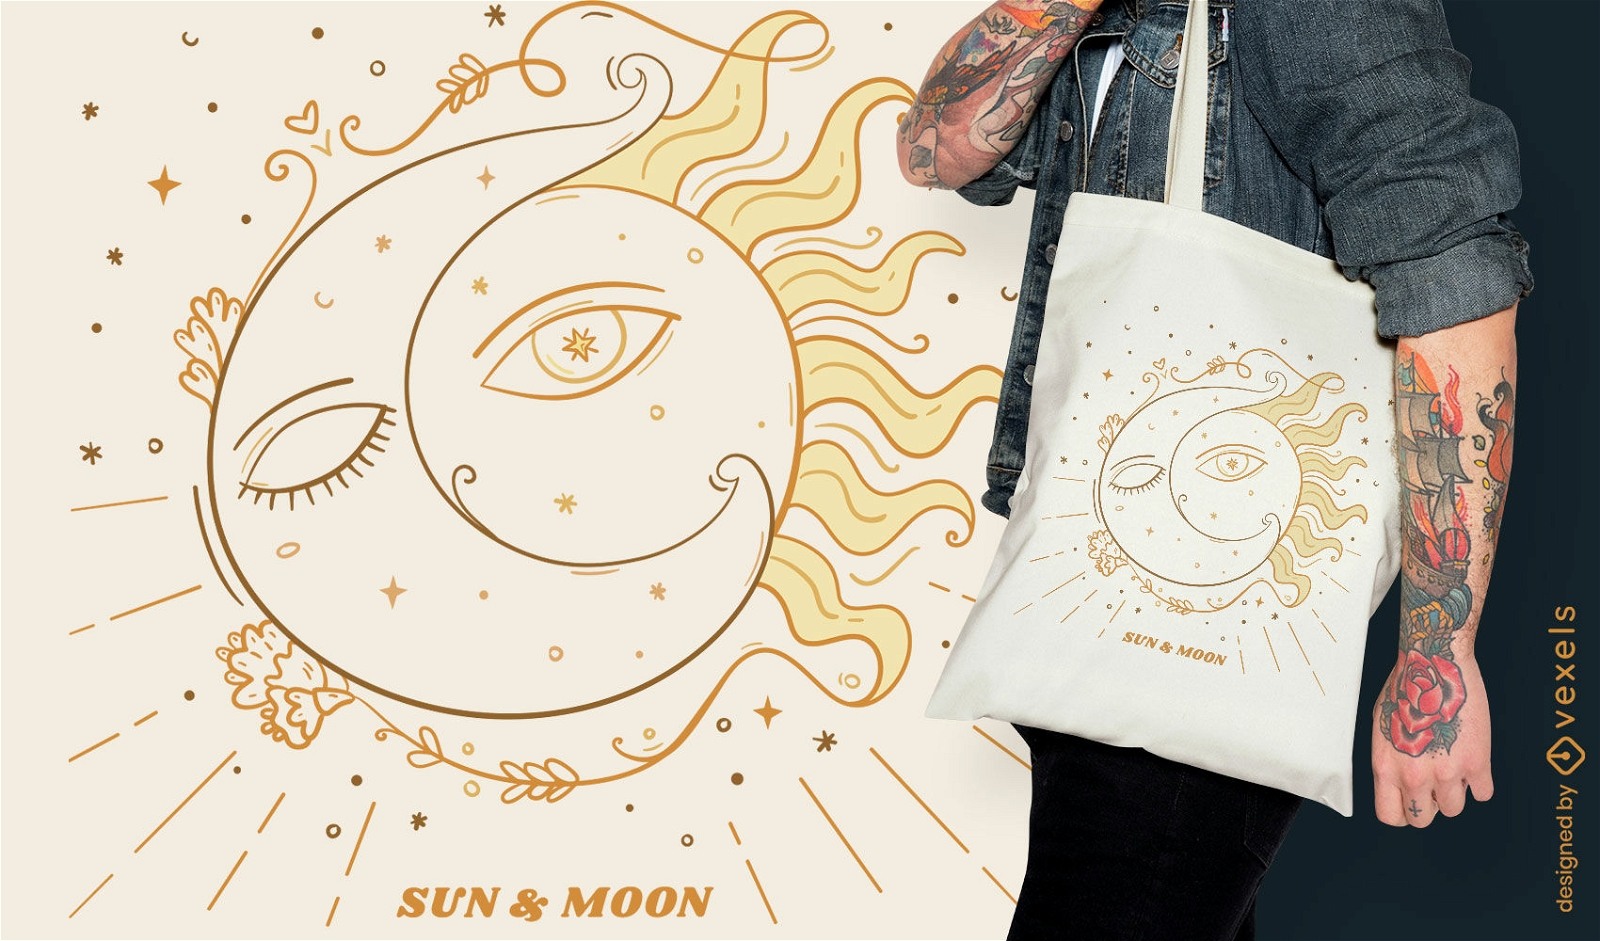 Moon and sun esoteric tote bag design